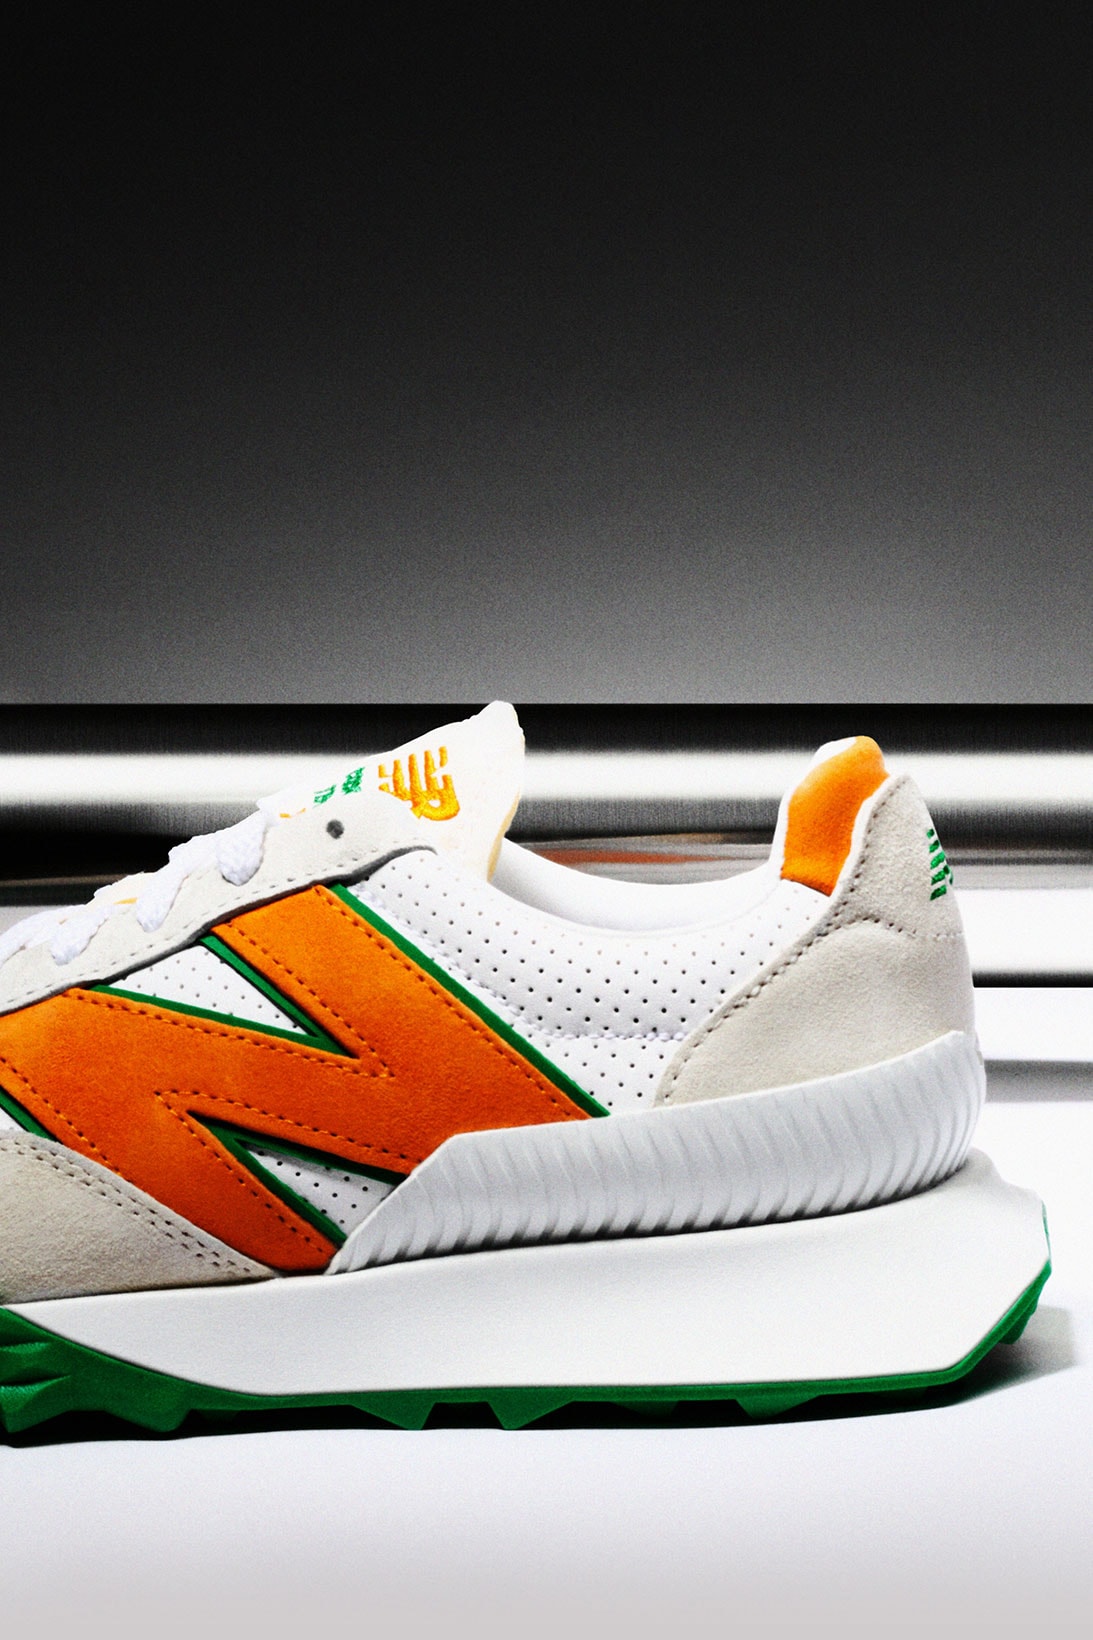 Casablanca New Balance NB XC-72 Sneakers Collaboration White Orange Green